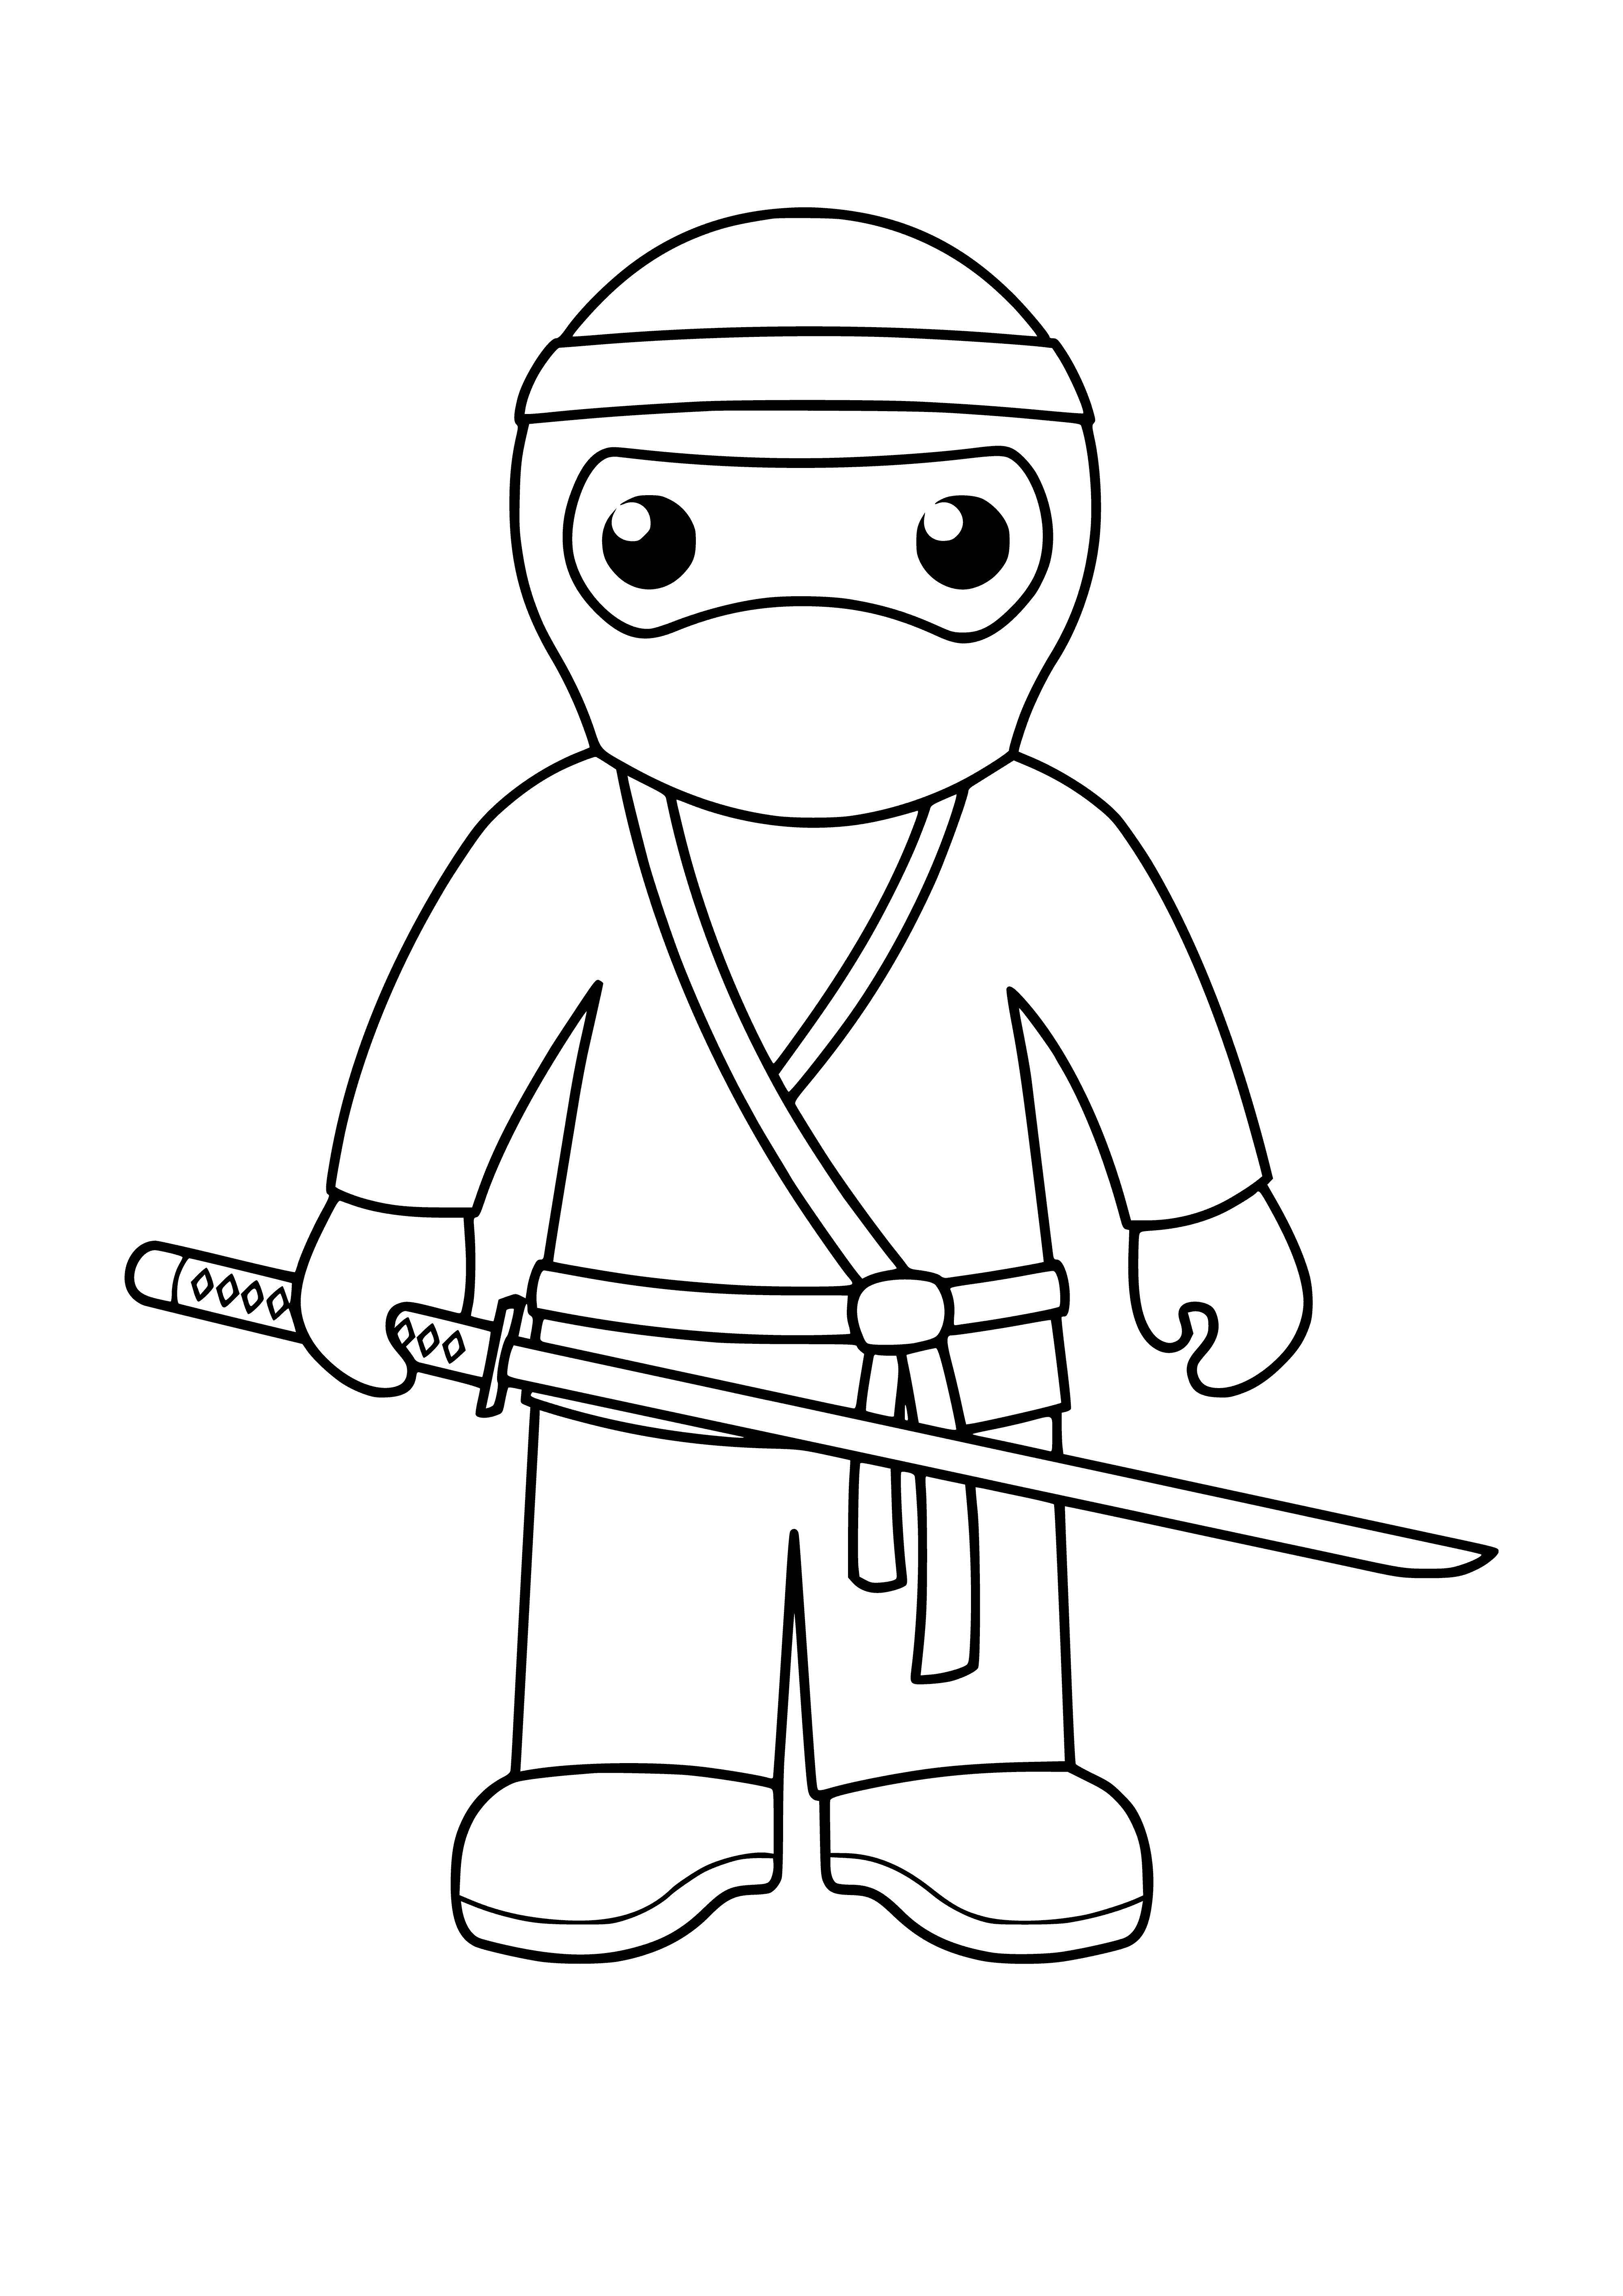 Ninja coloring page